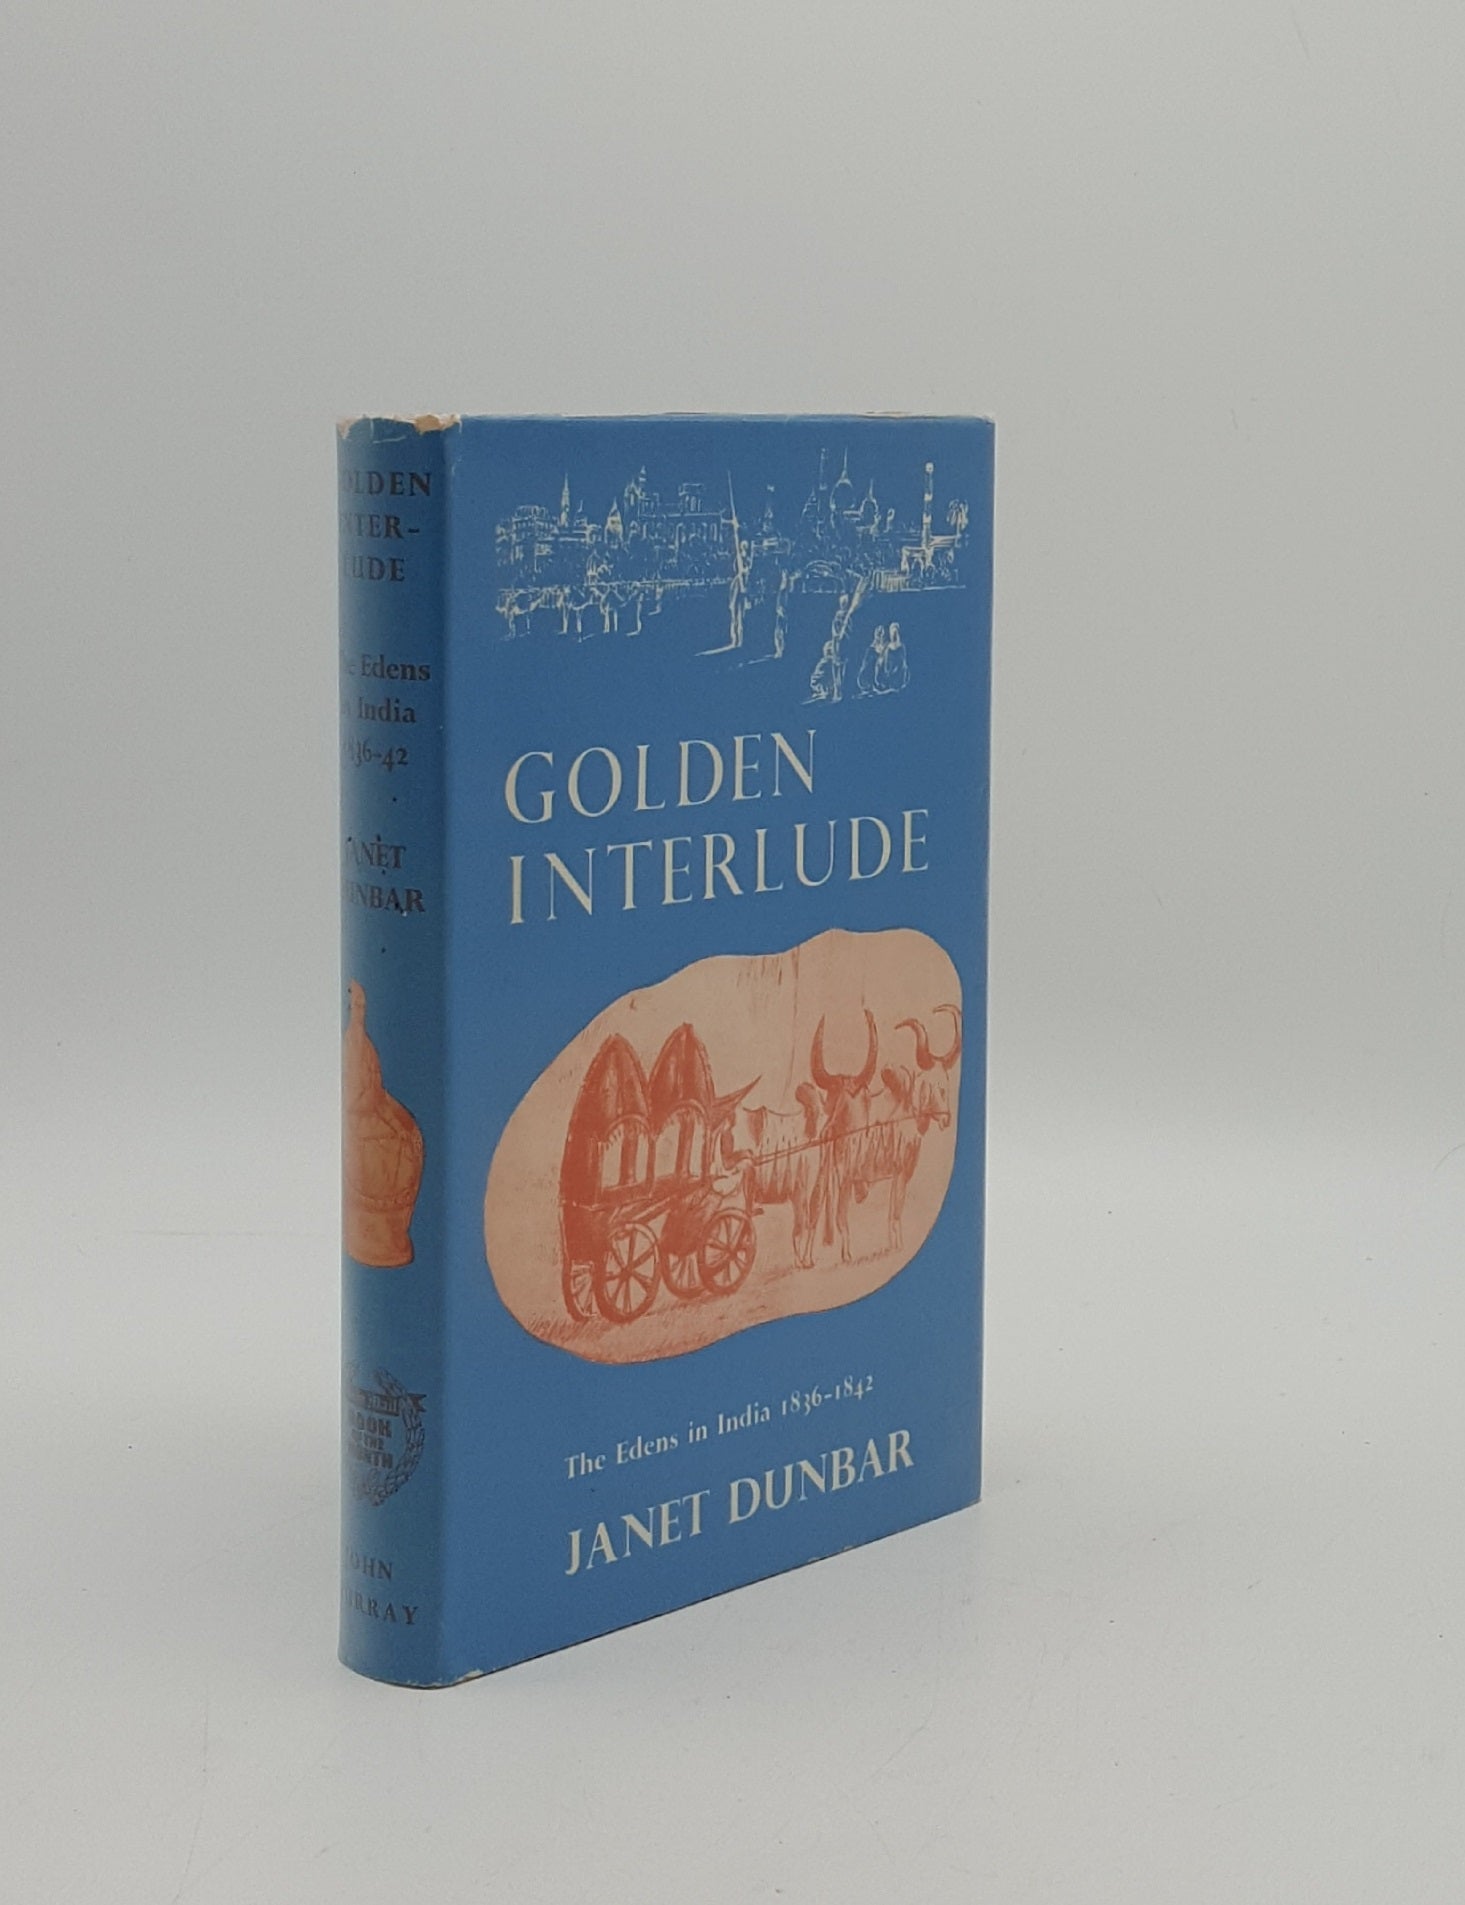 DUNBAR Janet - Golden Interlude the Edens in India 1836-1842